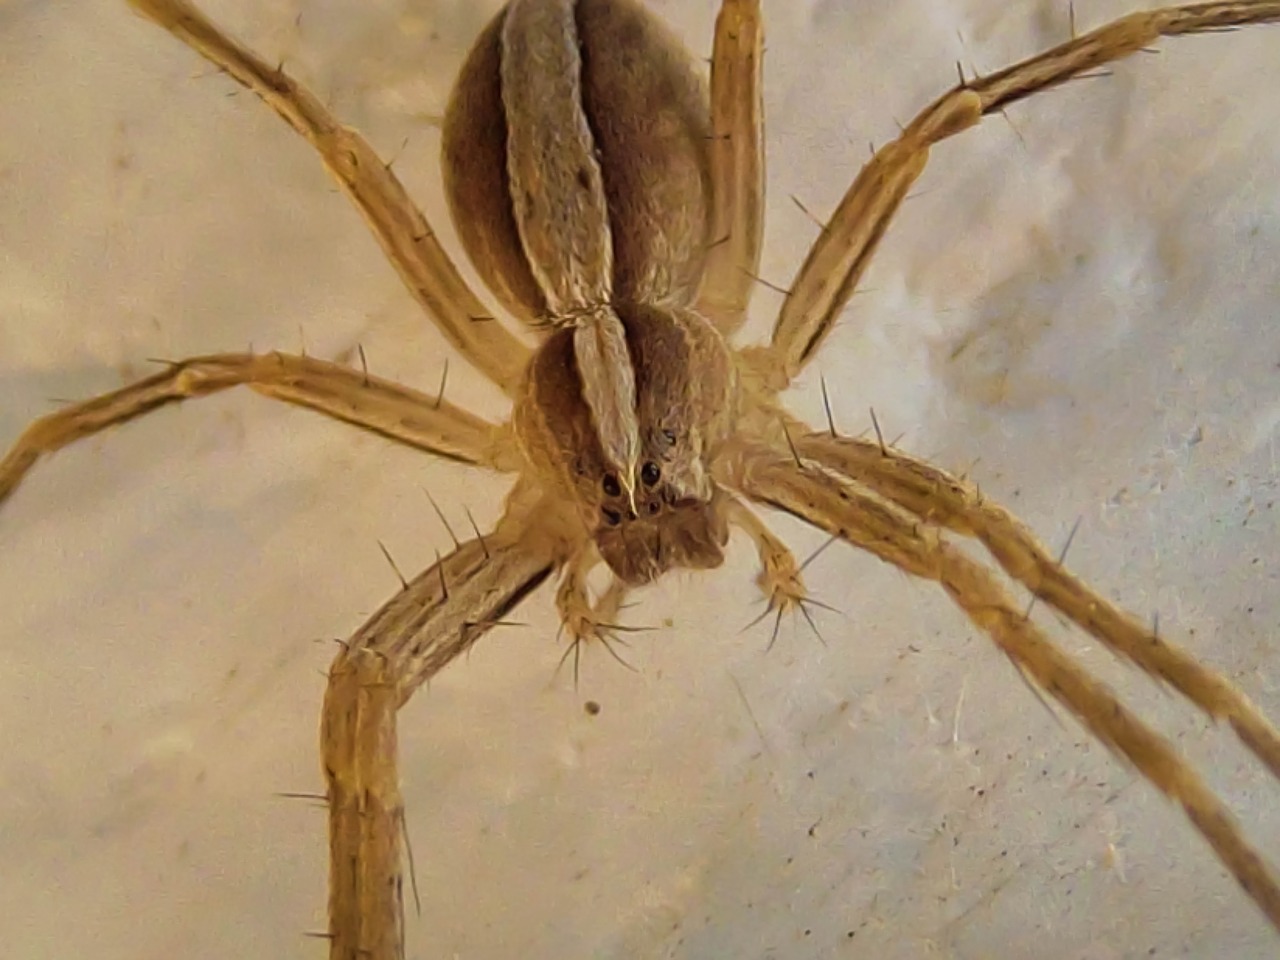 nursery web spider pisauridae harmless free photo